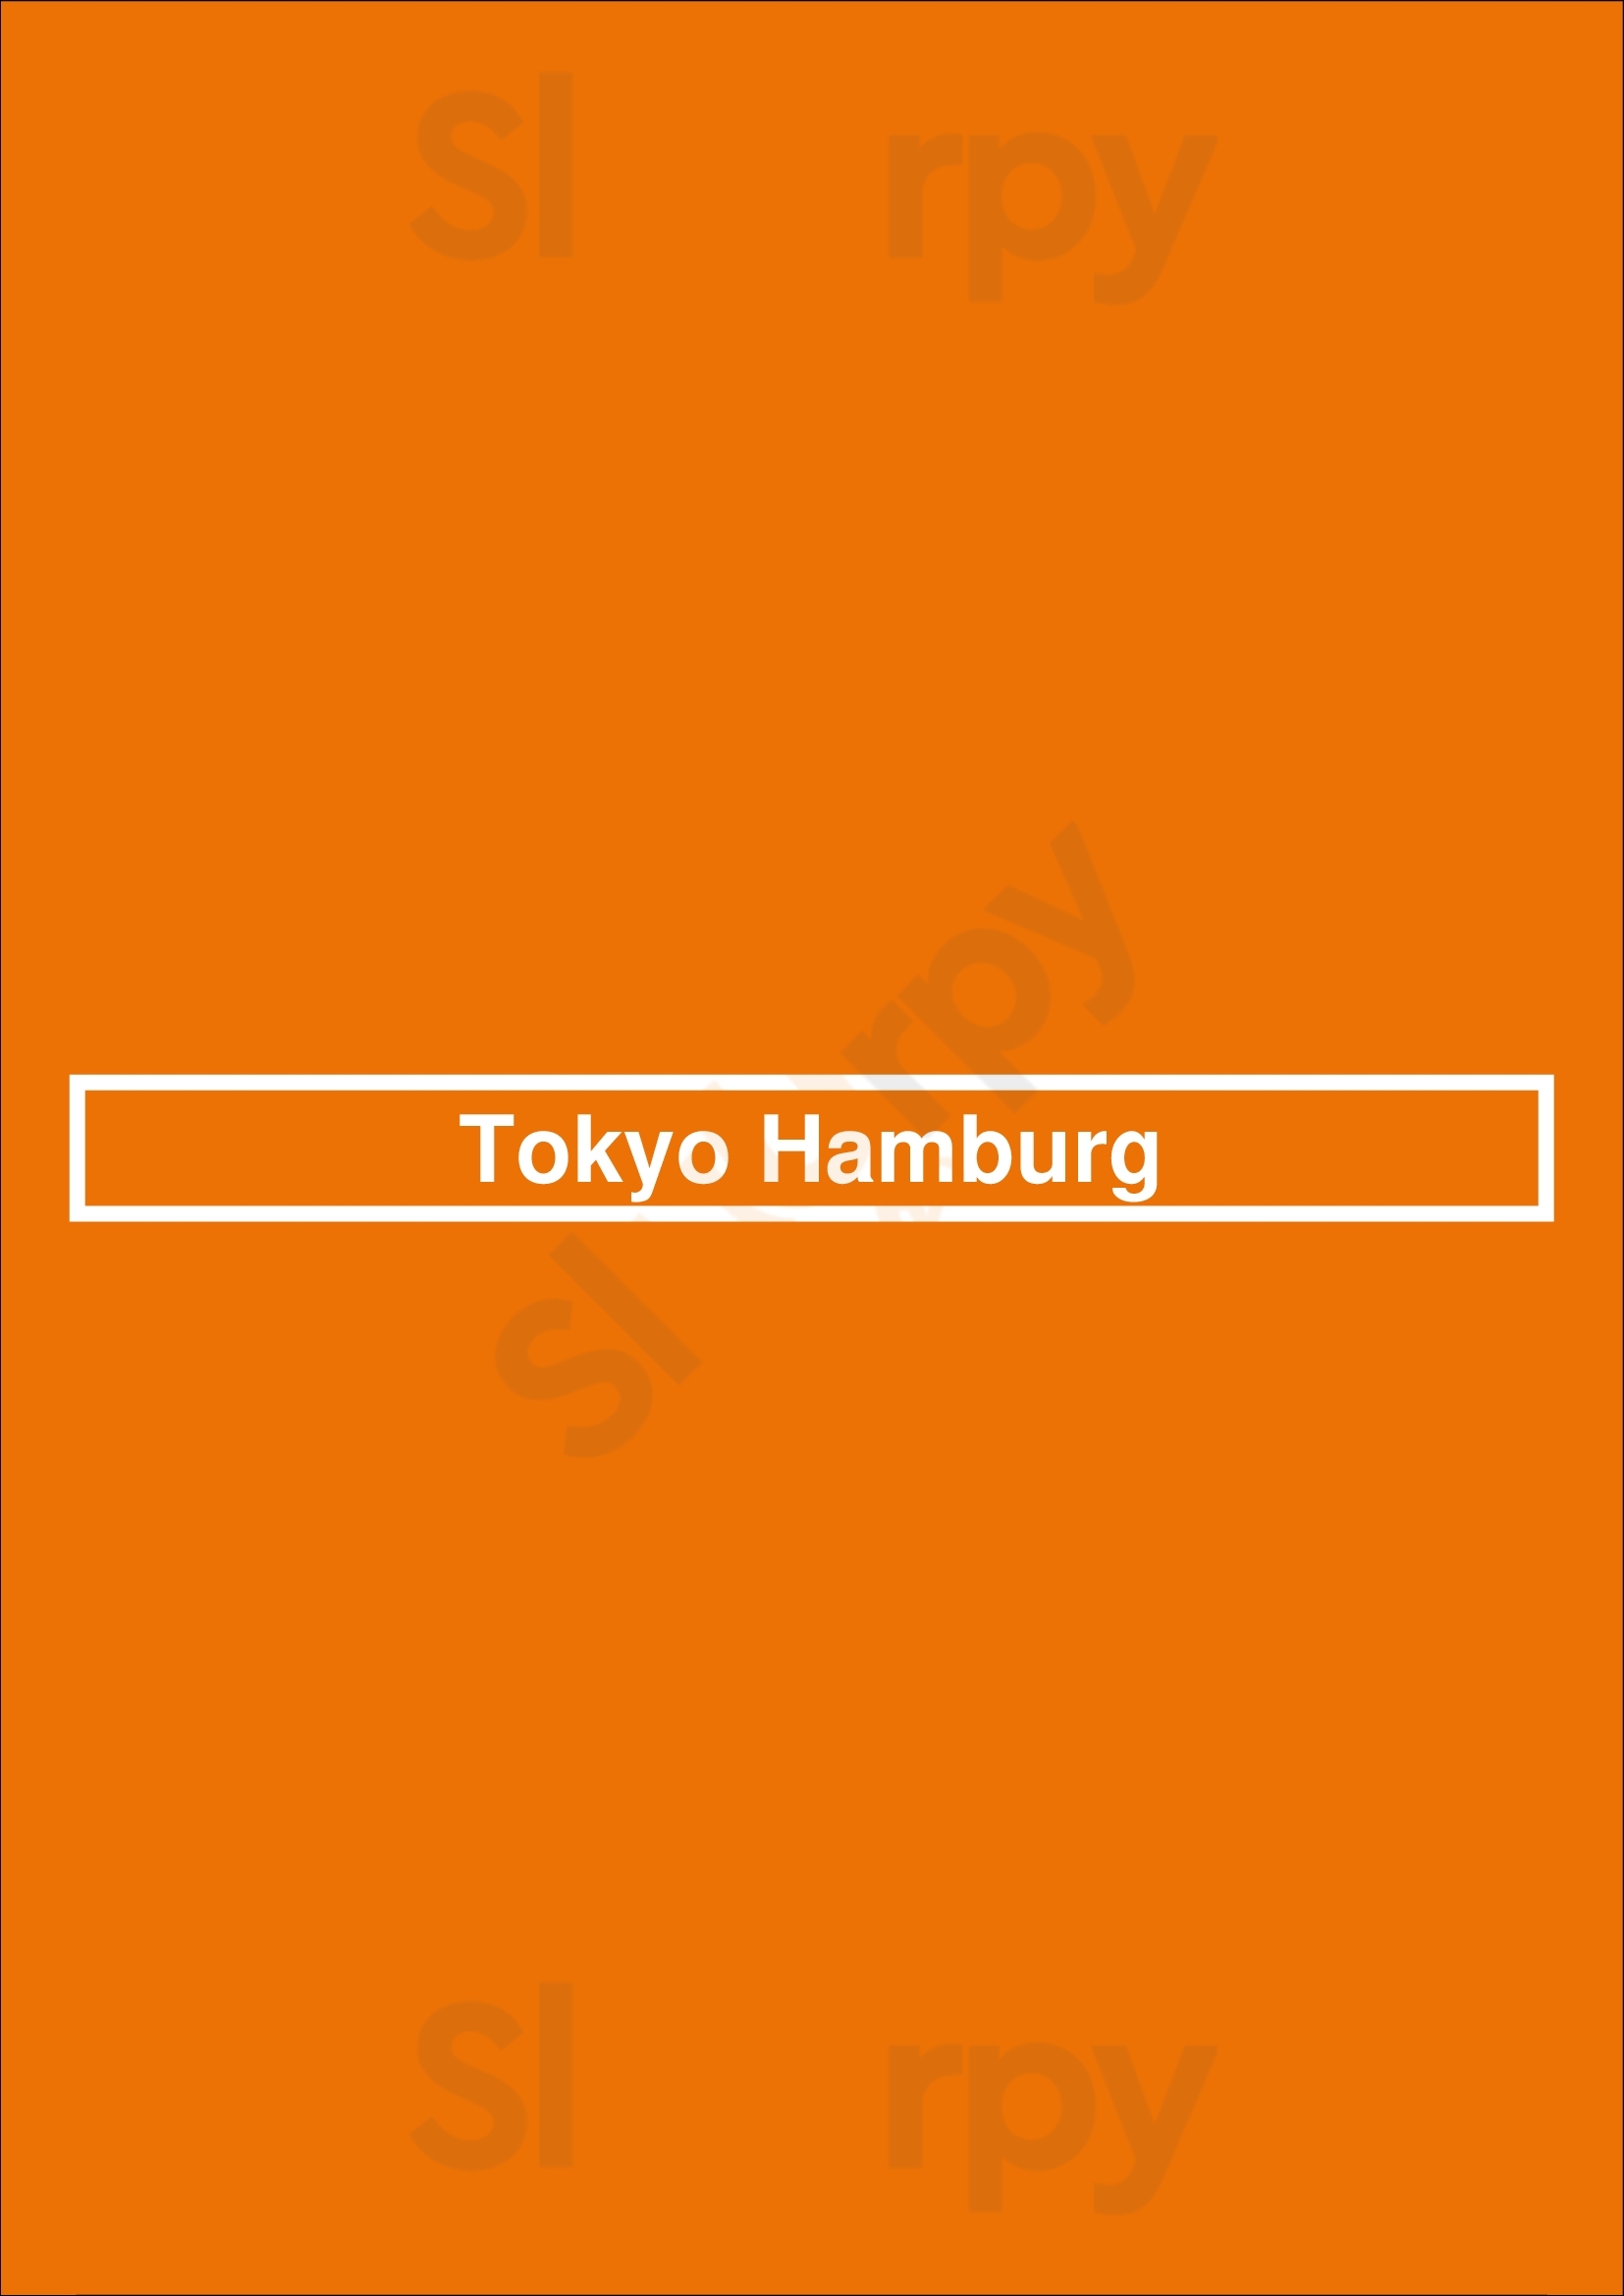 Tokyo Hamburg Los Angeles Menu - 1